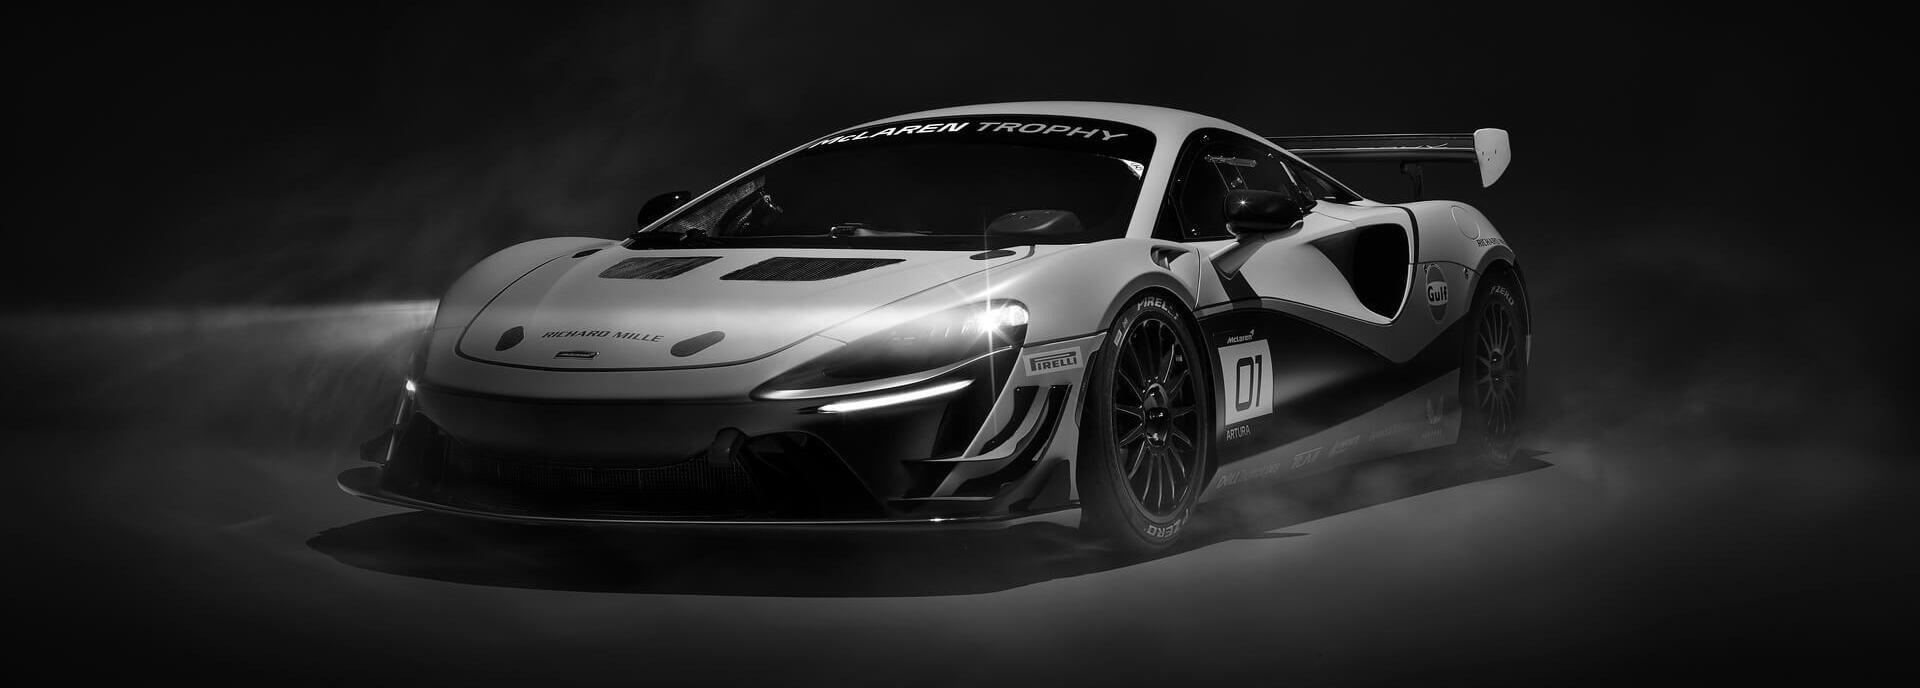 mclaren-artura-trophy-race-cars-dark-background-2022-5k-8k-7680x5727-8444 (1) (1) (1)-modified